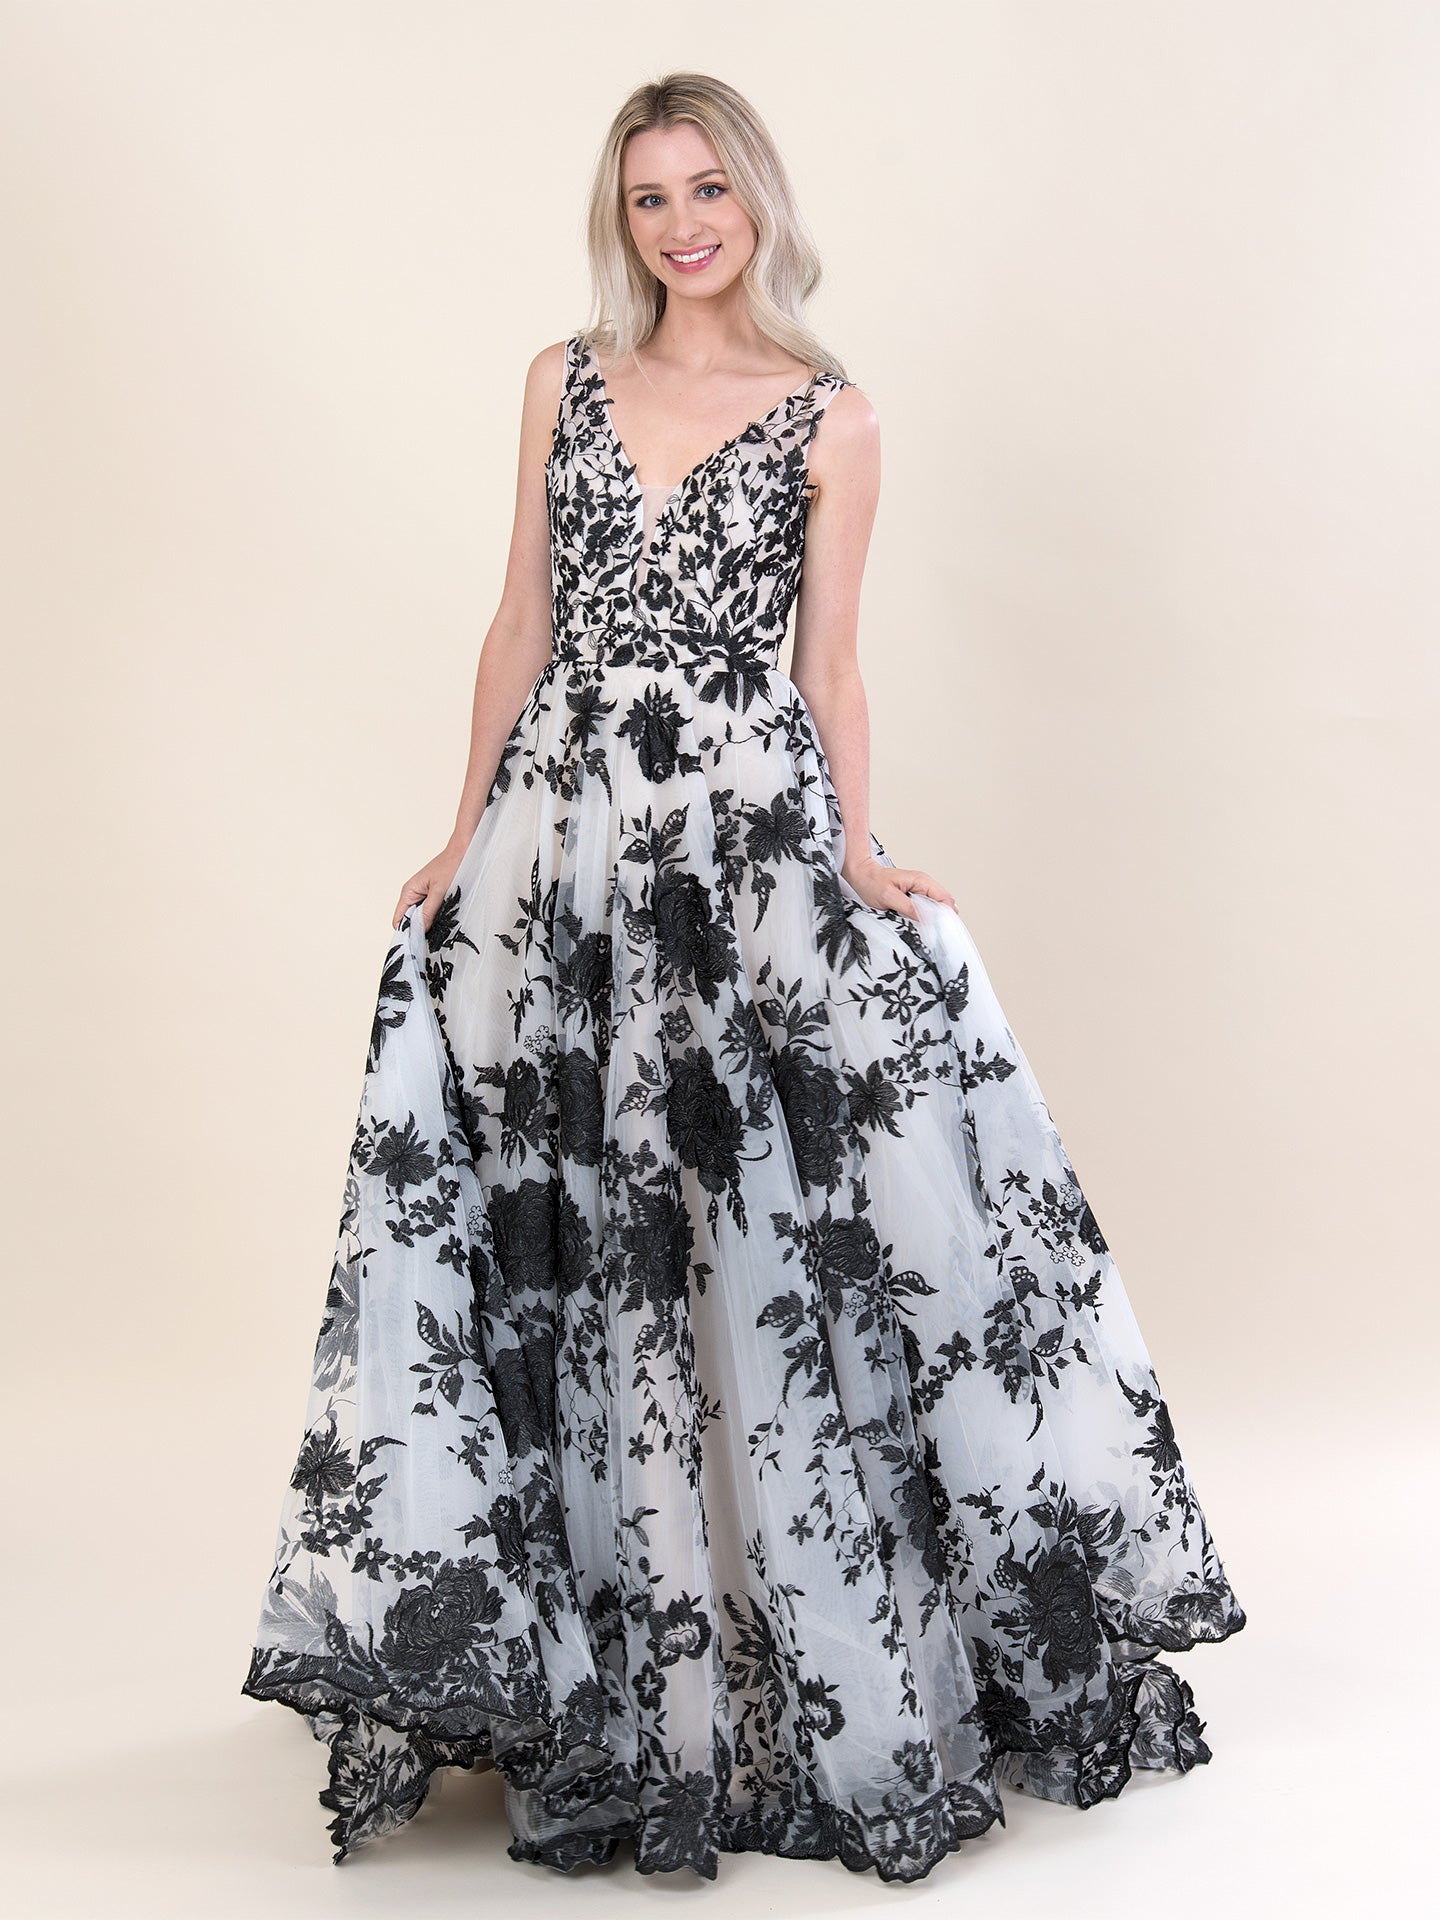 Black lace wedding dress 4078-black-wedding-dress-4078-black